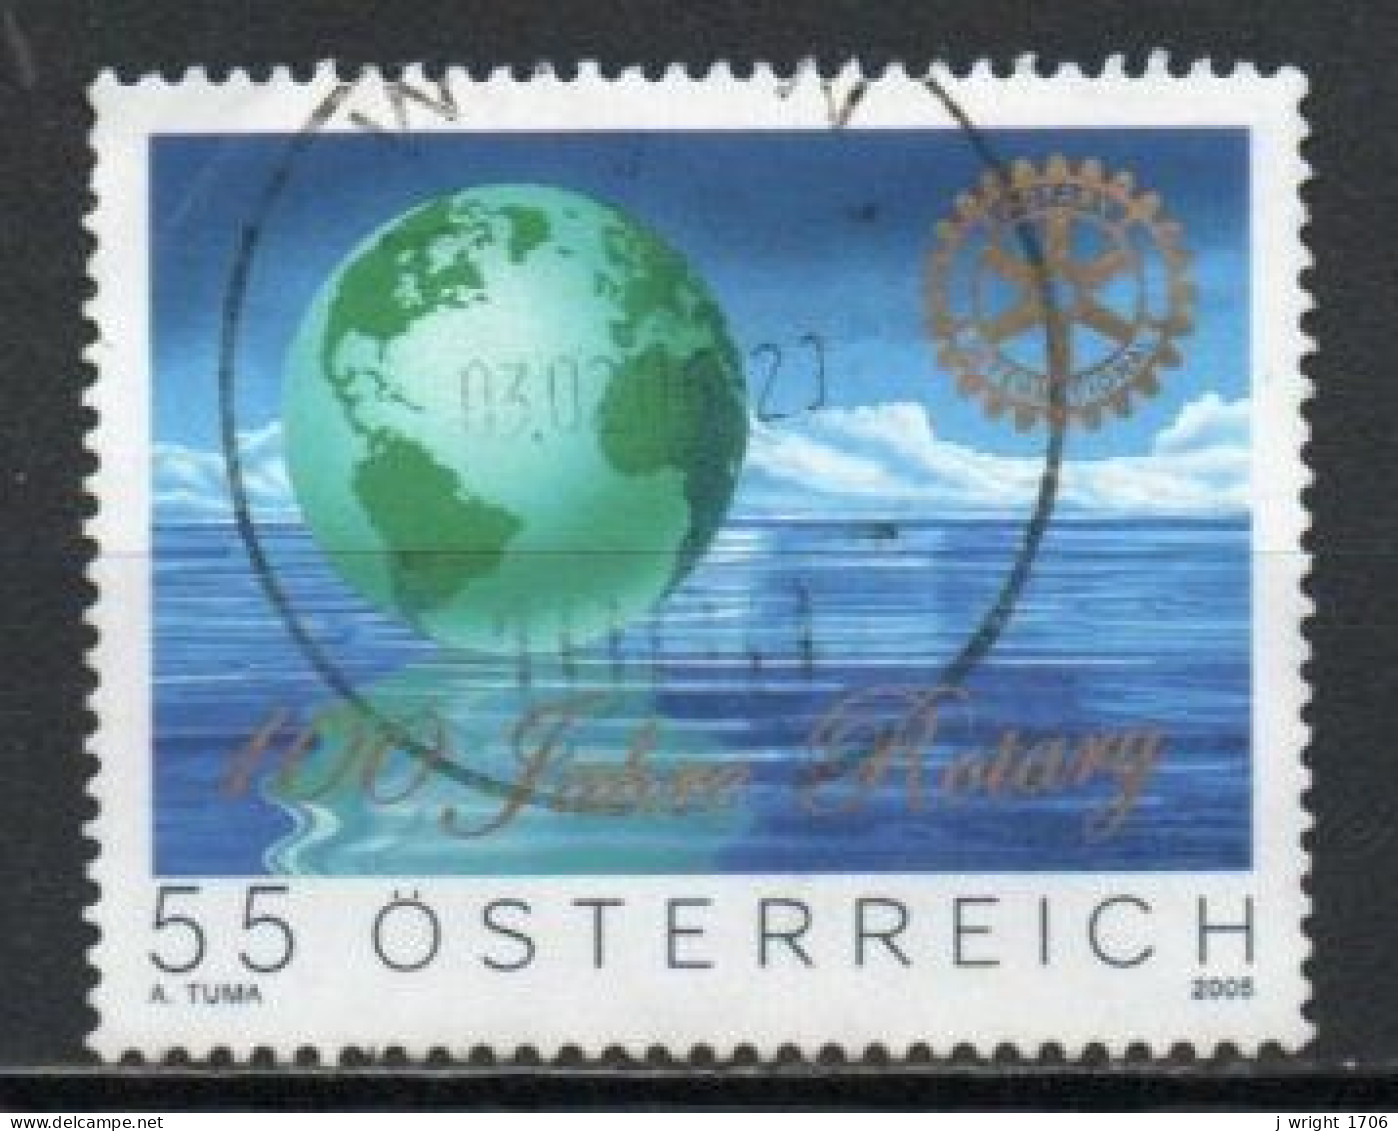 Austria, 2005, Rotary International Centenary, 55c, USED - Used Stamps